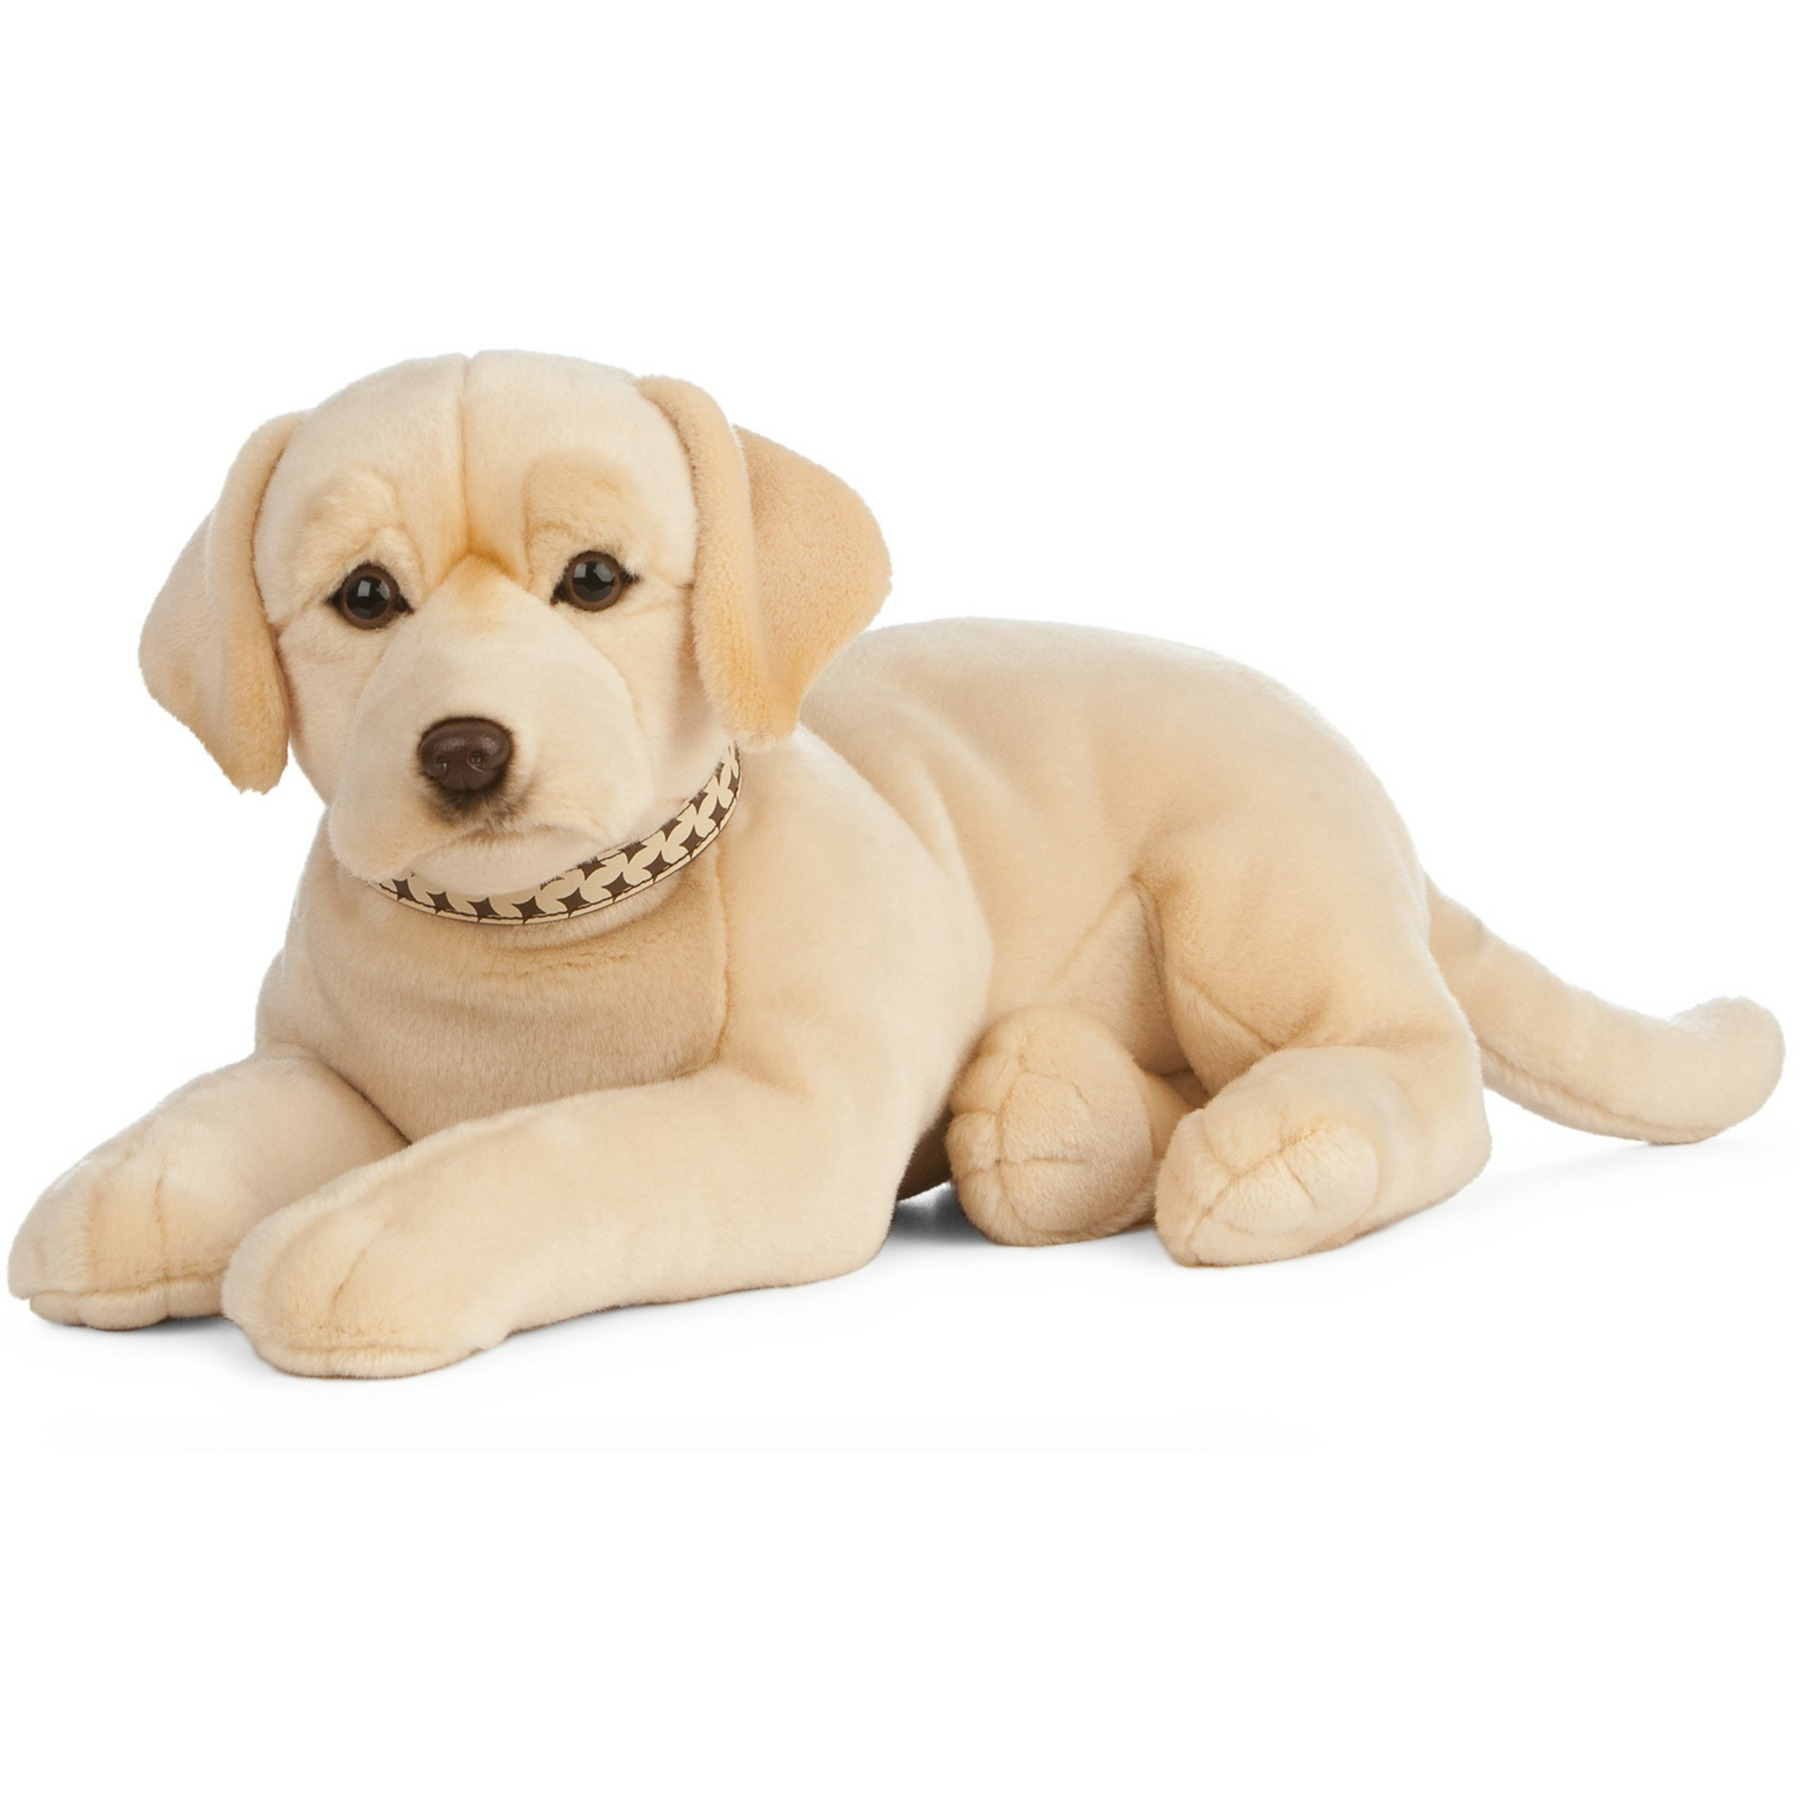 Honden speelgoed artikelen Labrador knuffelbeest blond 60 cm